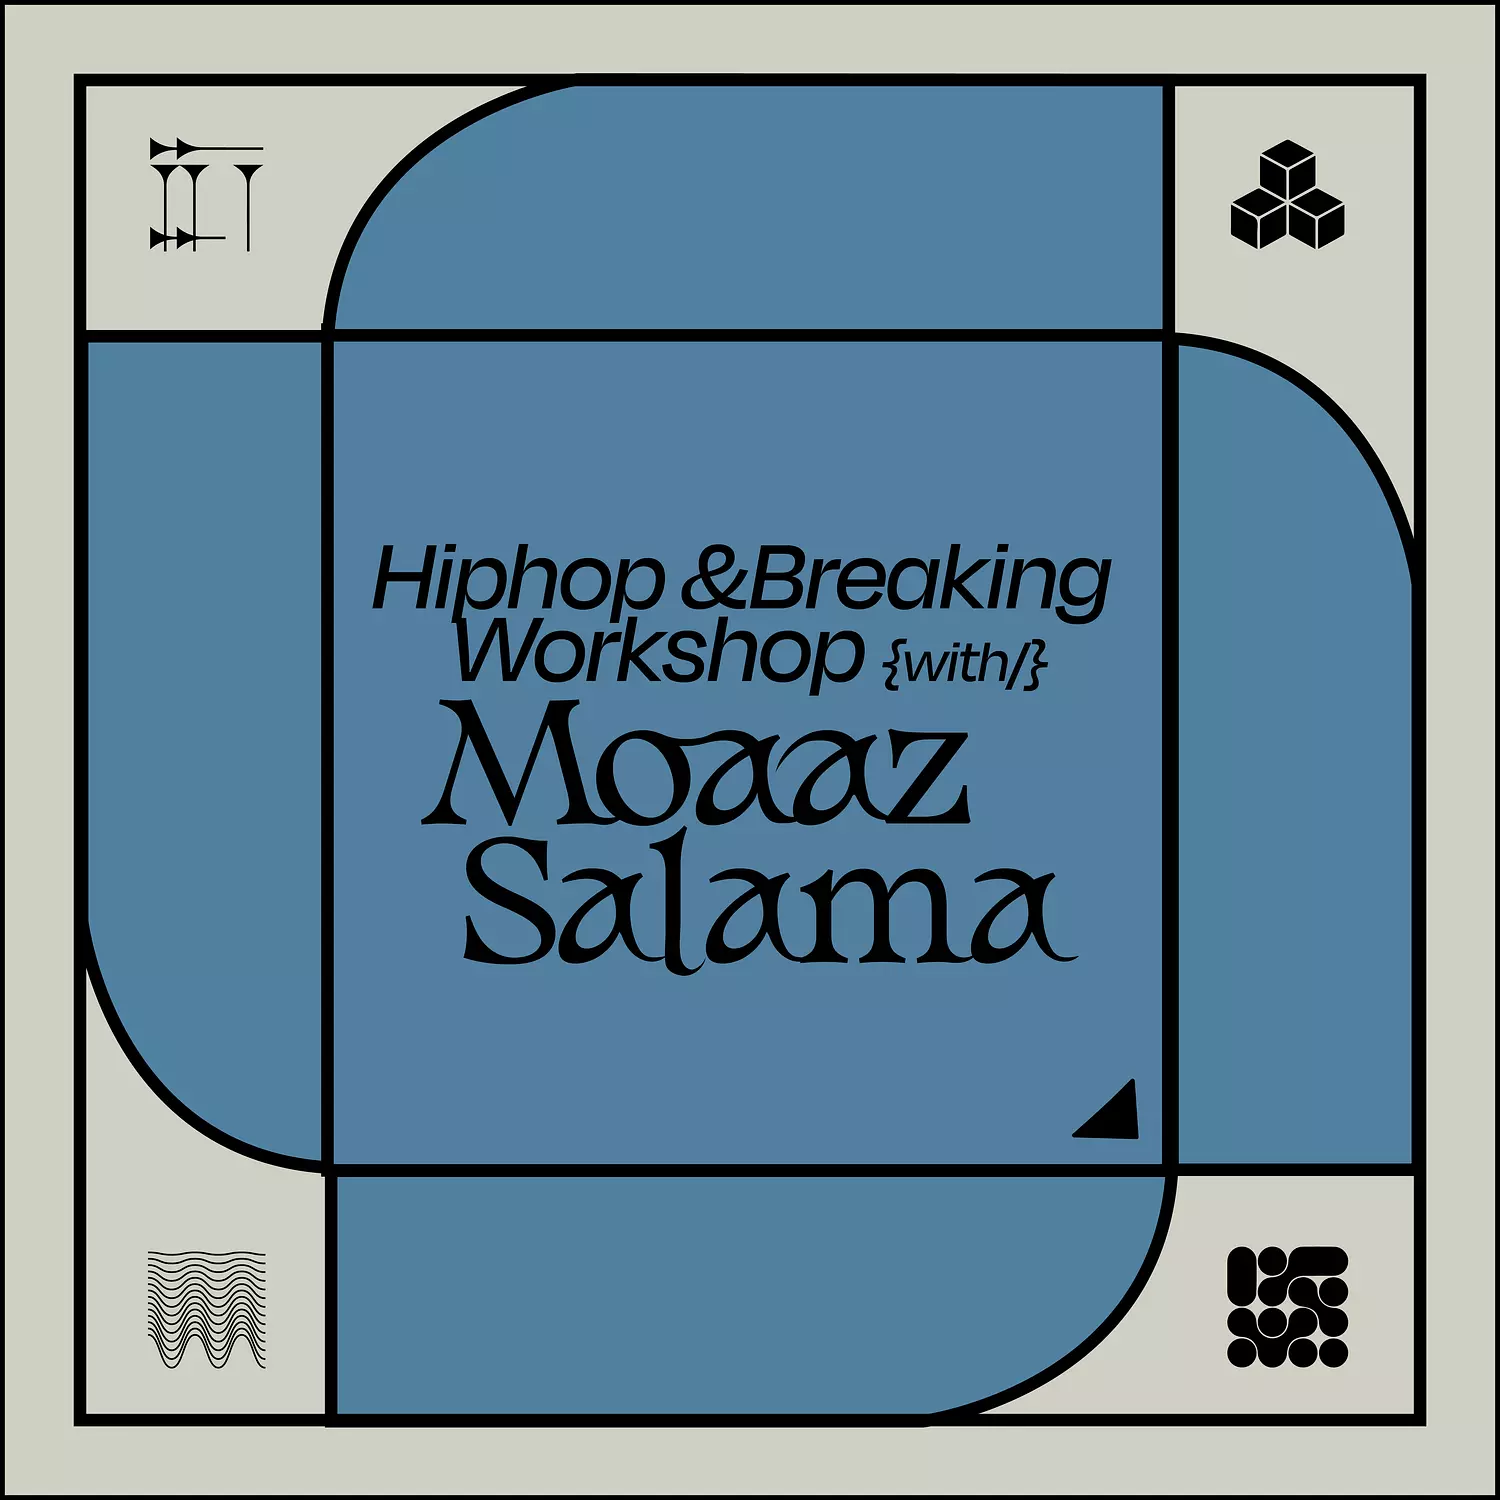 Hiphop & Breaking Workshop - Moaaz Salama hover image